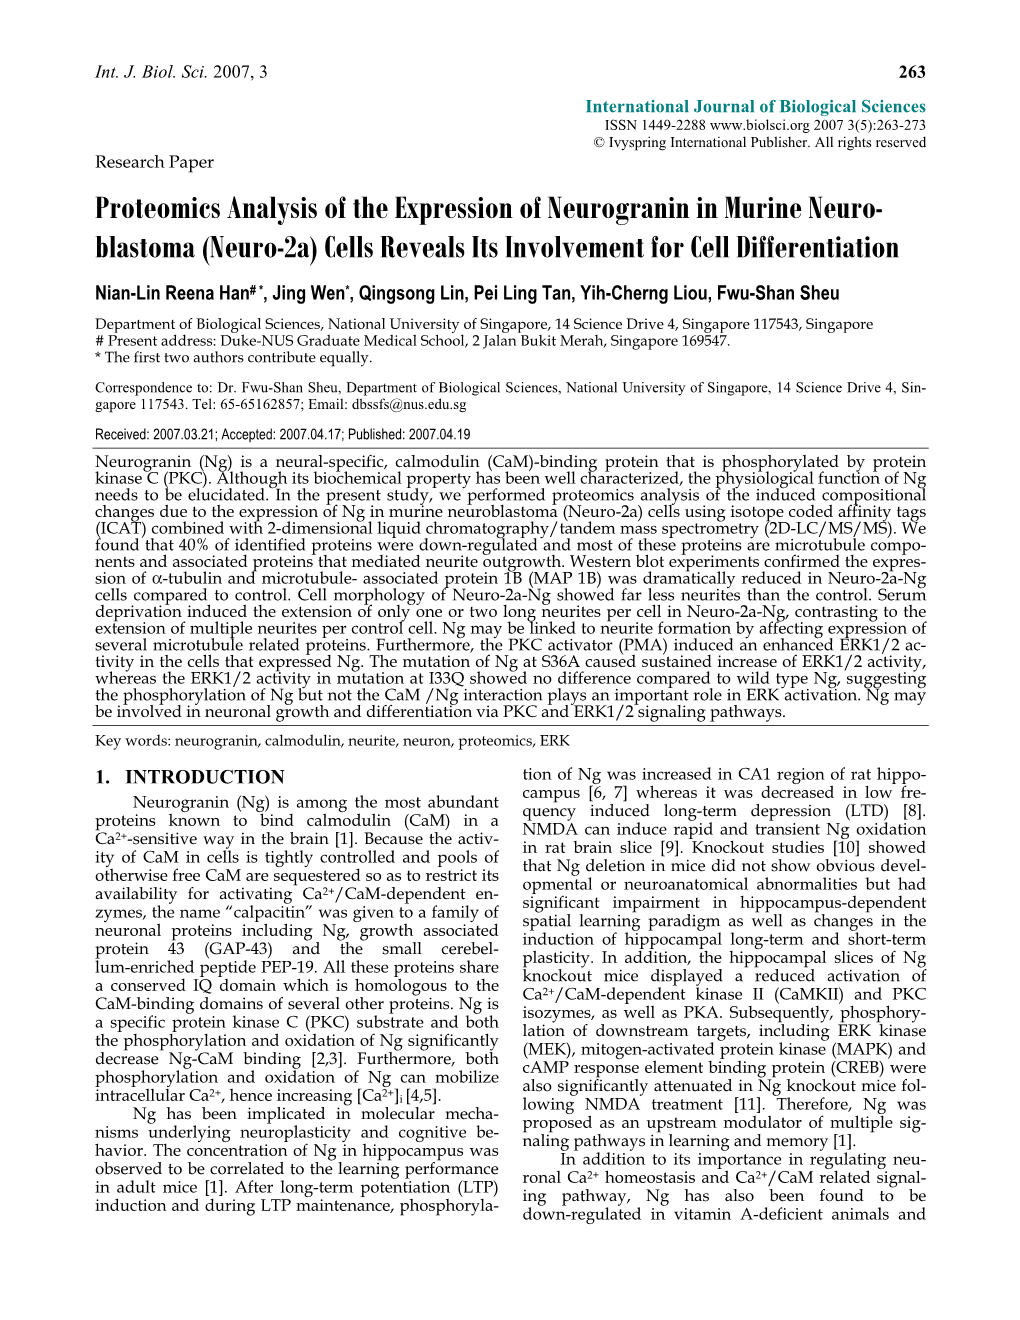 Proteomics Analysis of the Expression of Neurogranin in Murine Neuro